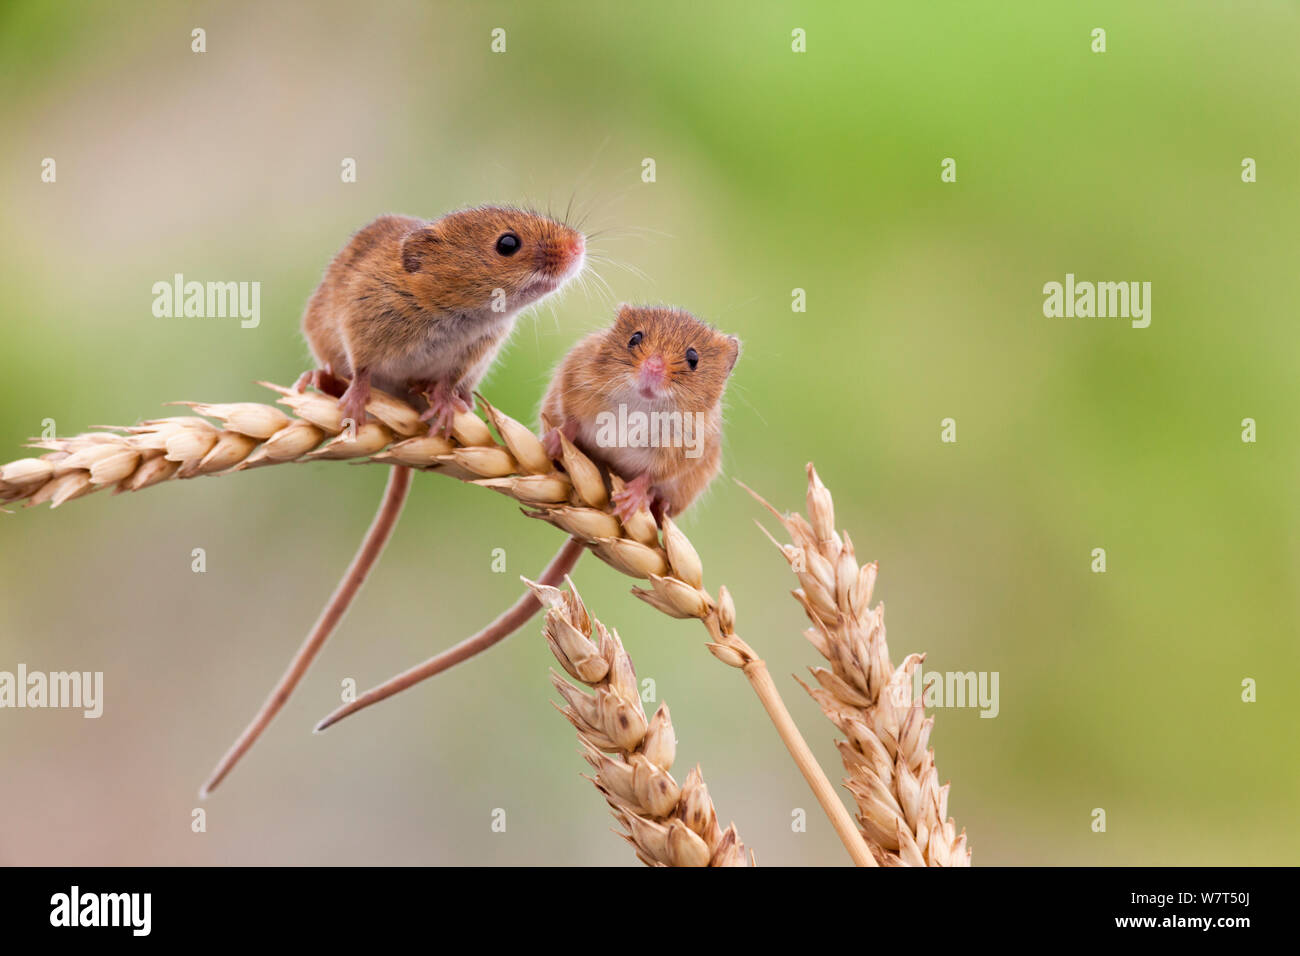 Mäuse (Micromys Minutus), Ernte in Gefangenschaft, UK, Juni Stockfoto